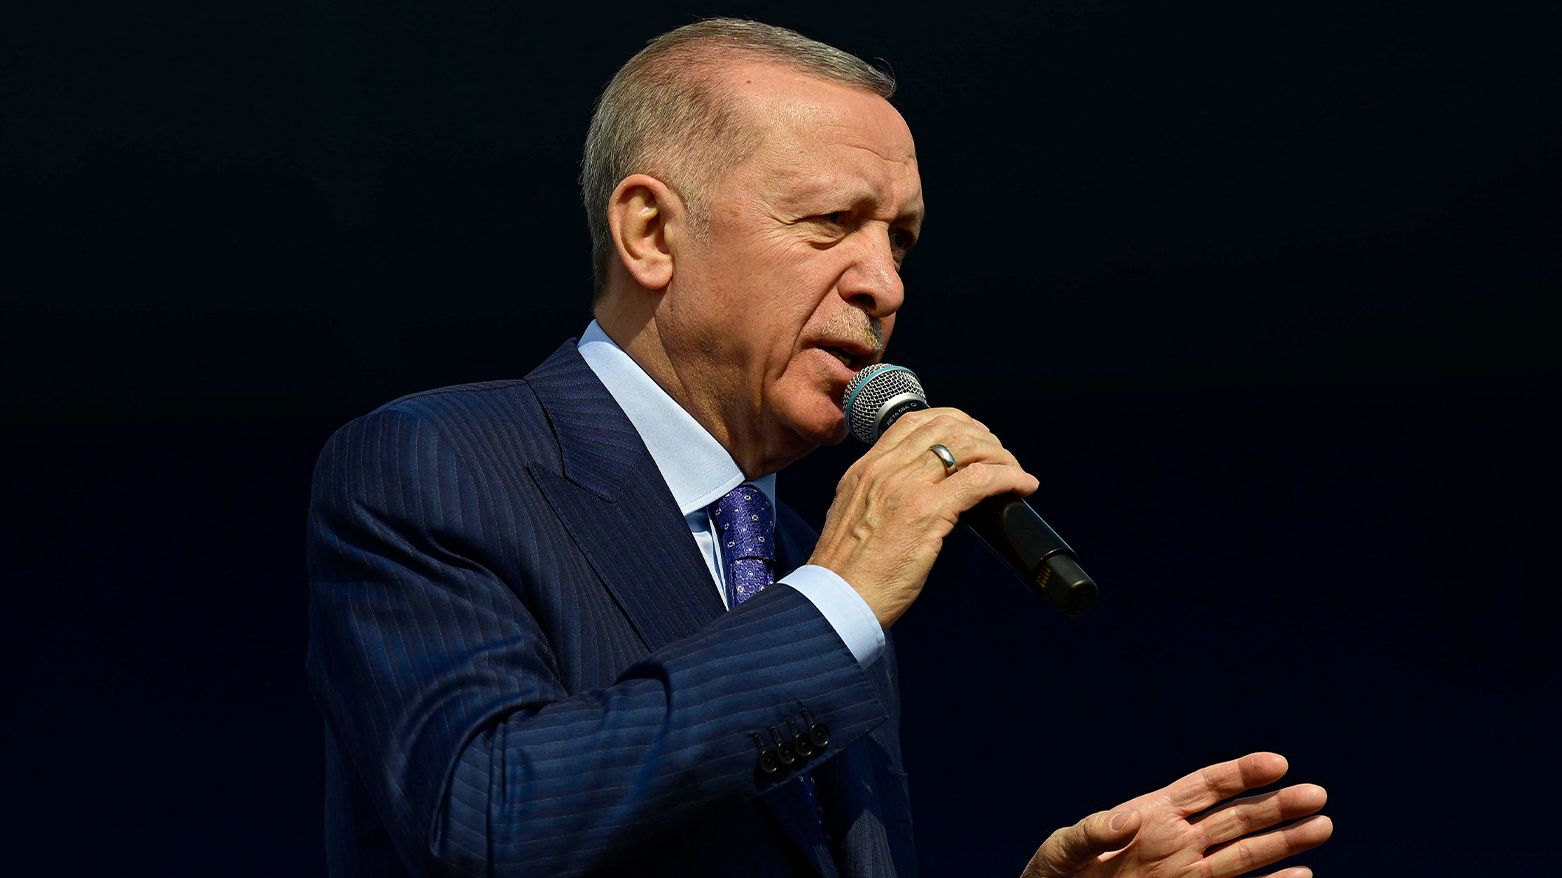 Turkeys Erdogan to meet Biden at White House on May 